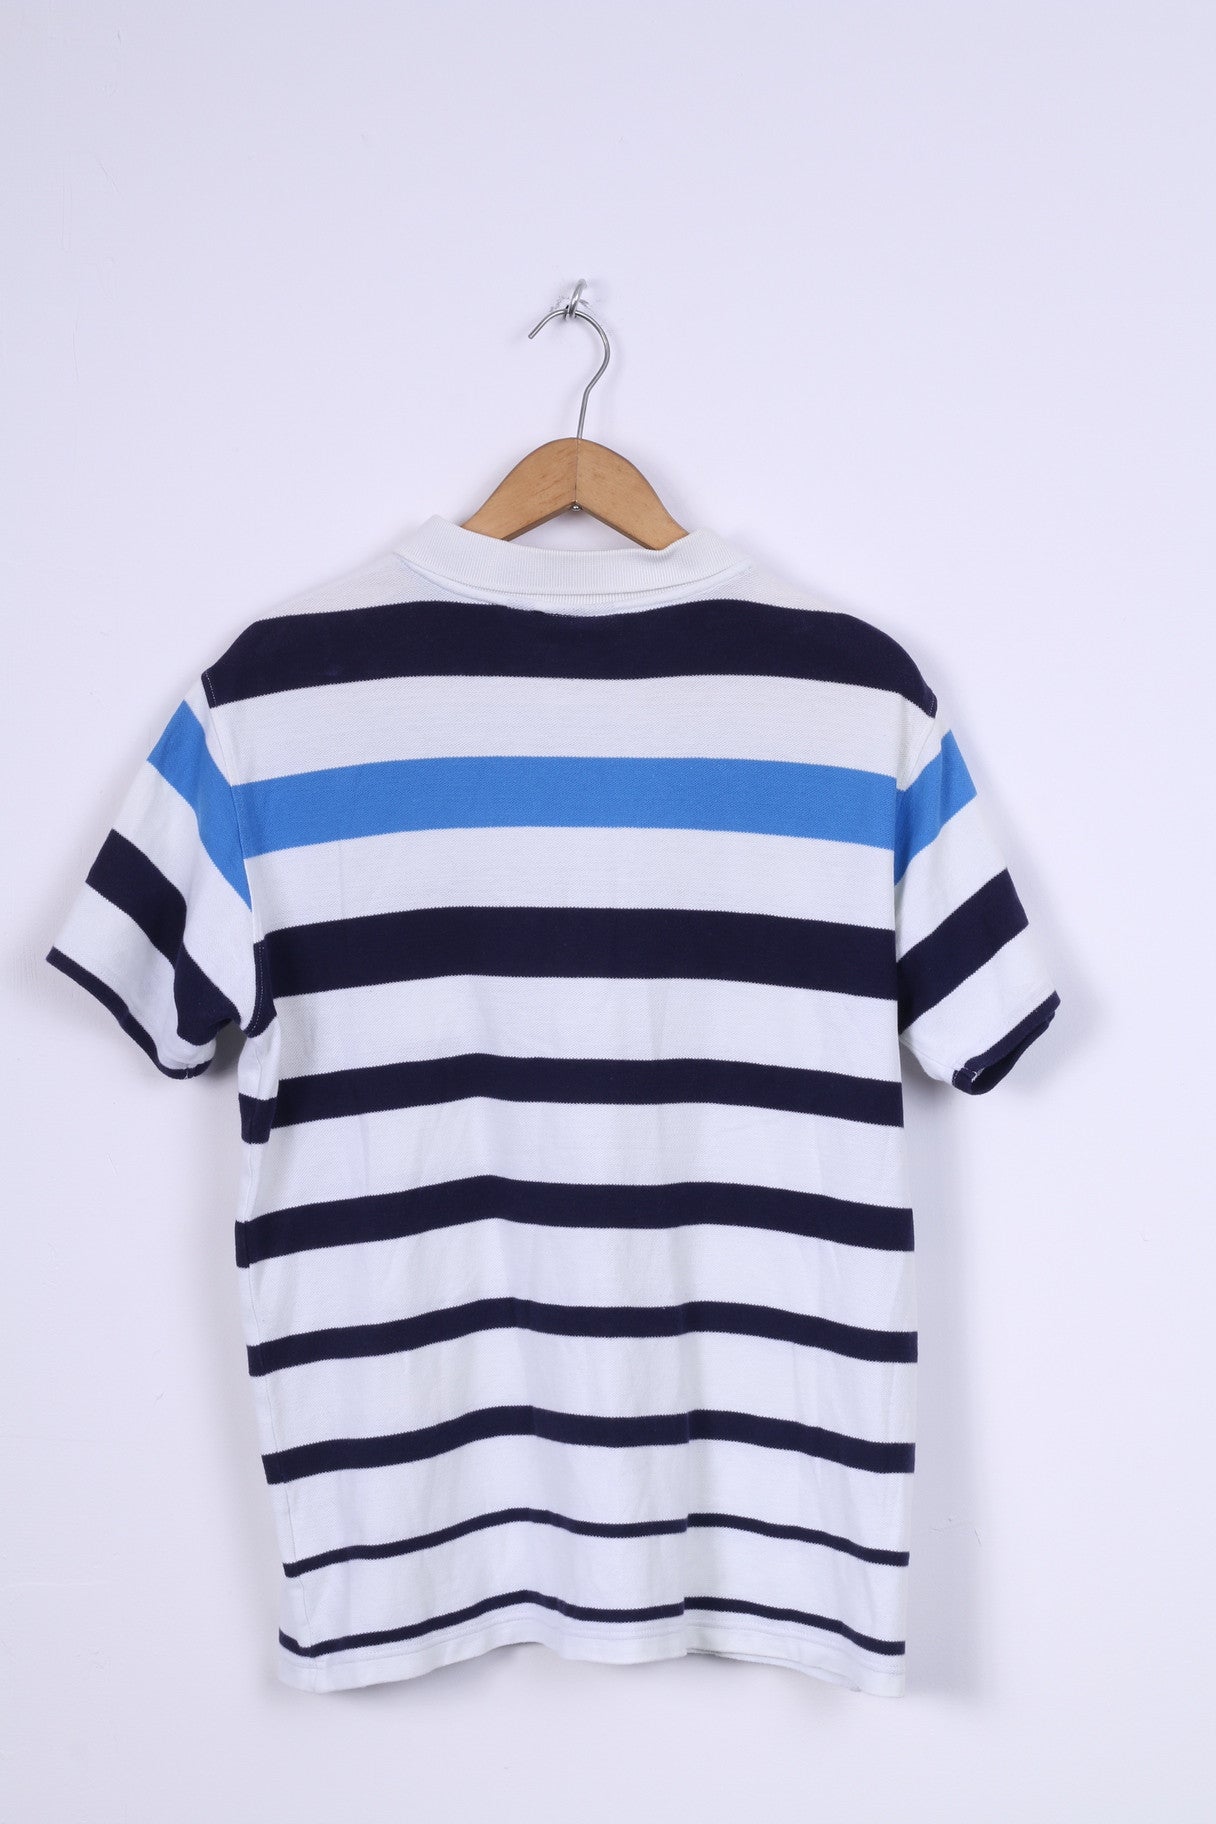 FILA Mens L Polo Shirt White Striped Blue Short Sleeve Cotton Sport Detailed Buttons